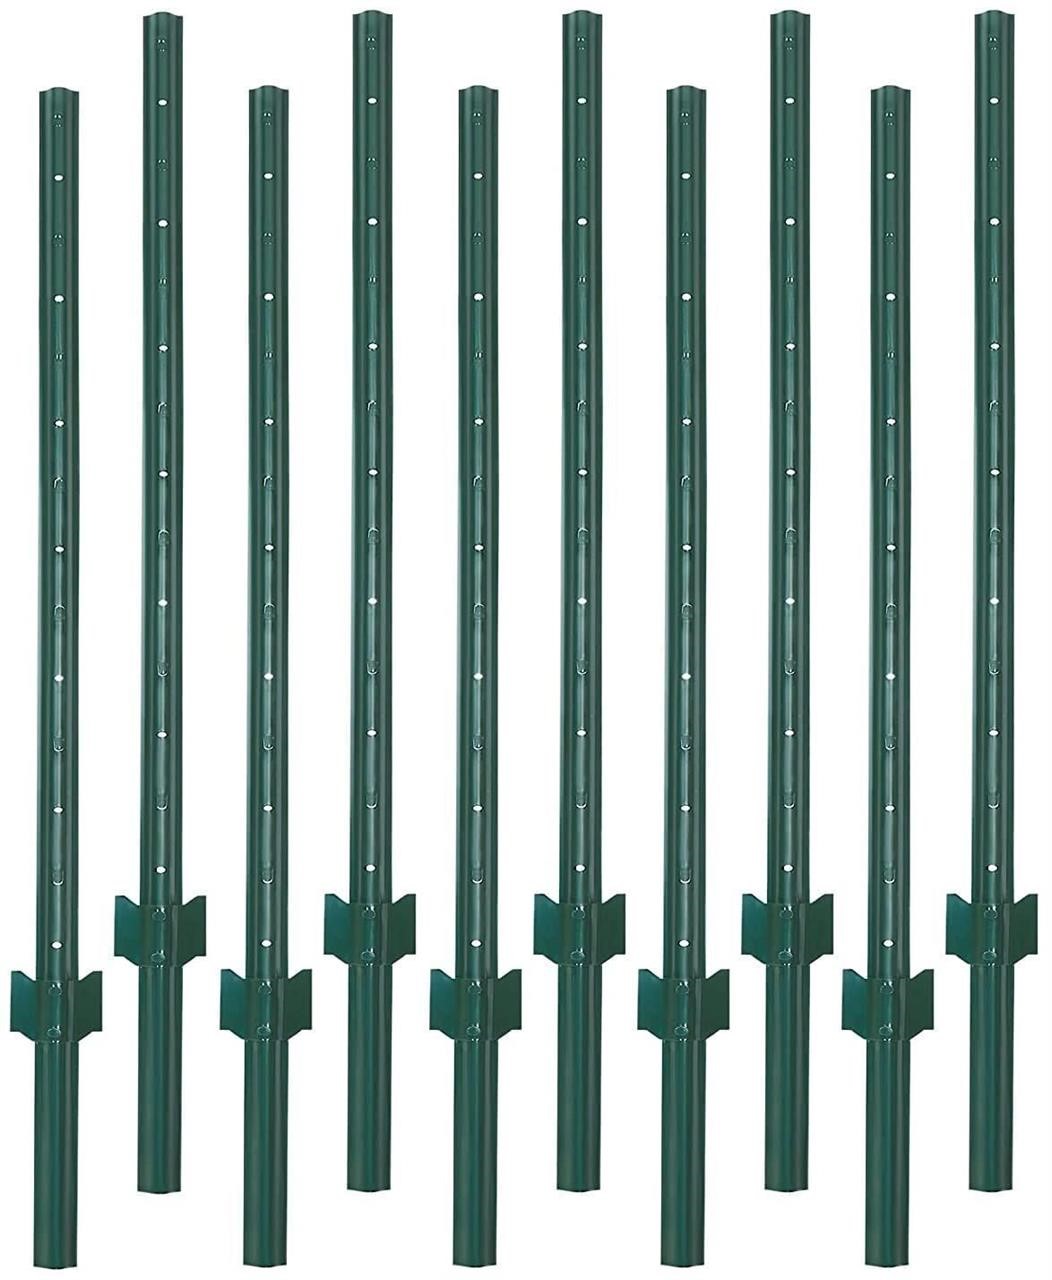 Bent - VASGOR 7 Feet Sturdy Duty Metal Fence Post